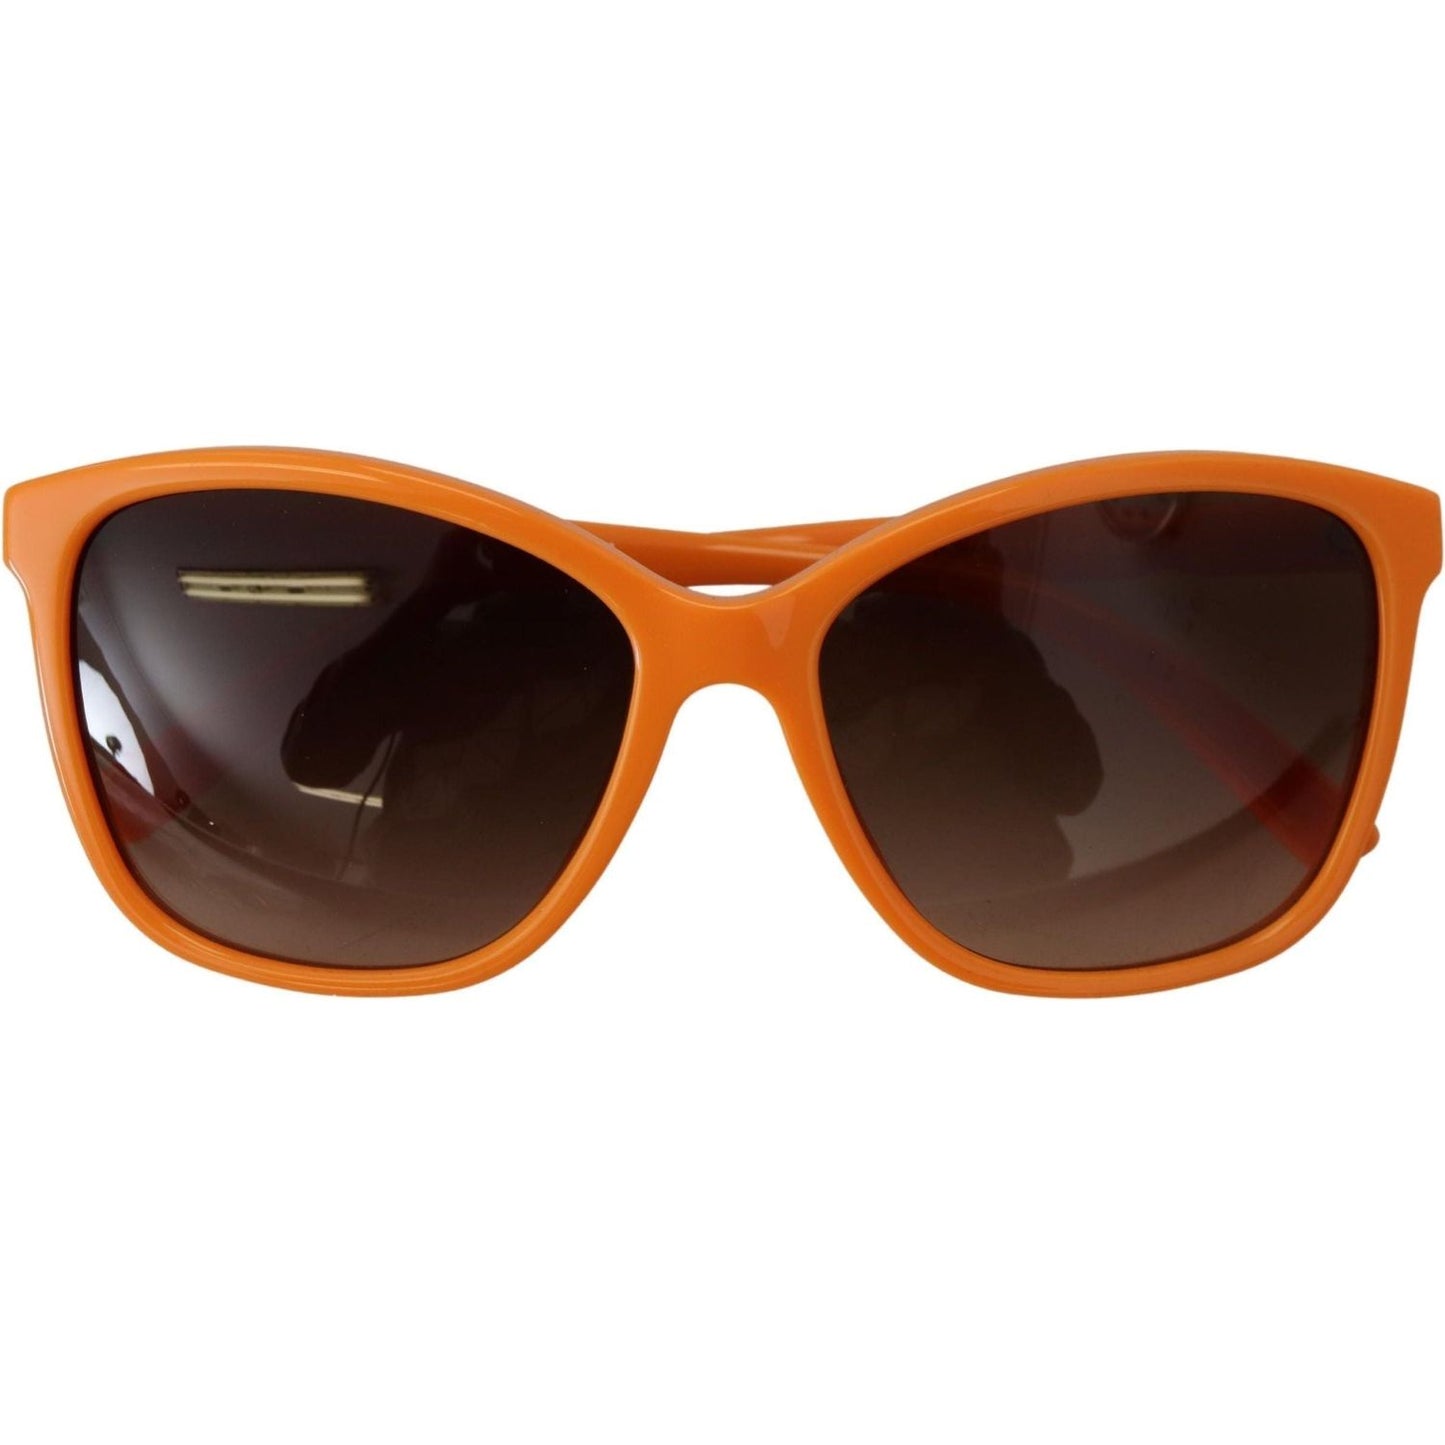 Dolce & Gabbana Chic Orange Round Sunglasses for Women orange-acetate-frame-round-shades-dg4170pm-sunglasses IMG_4516-1-scaled-d2ed1756-391.jpg